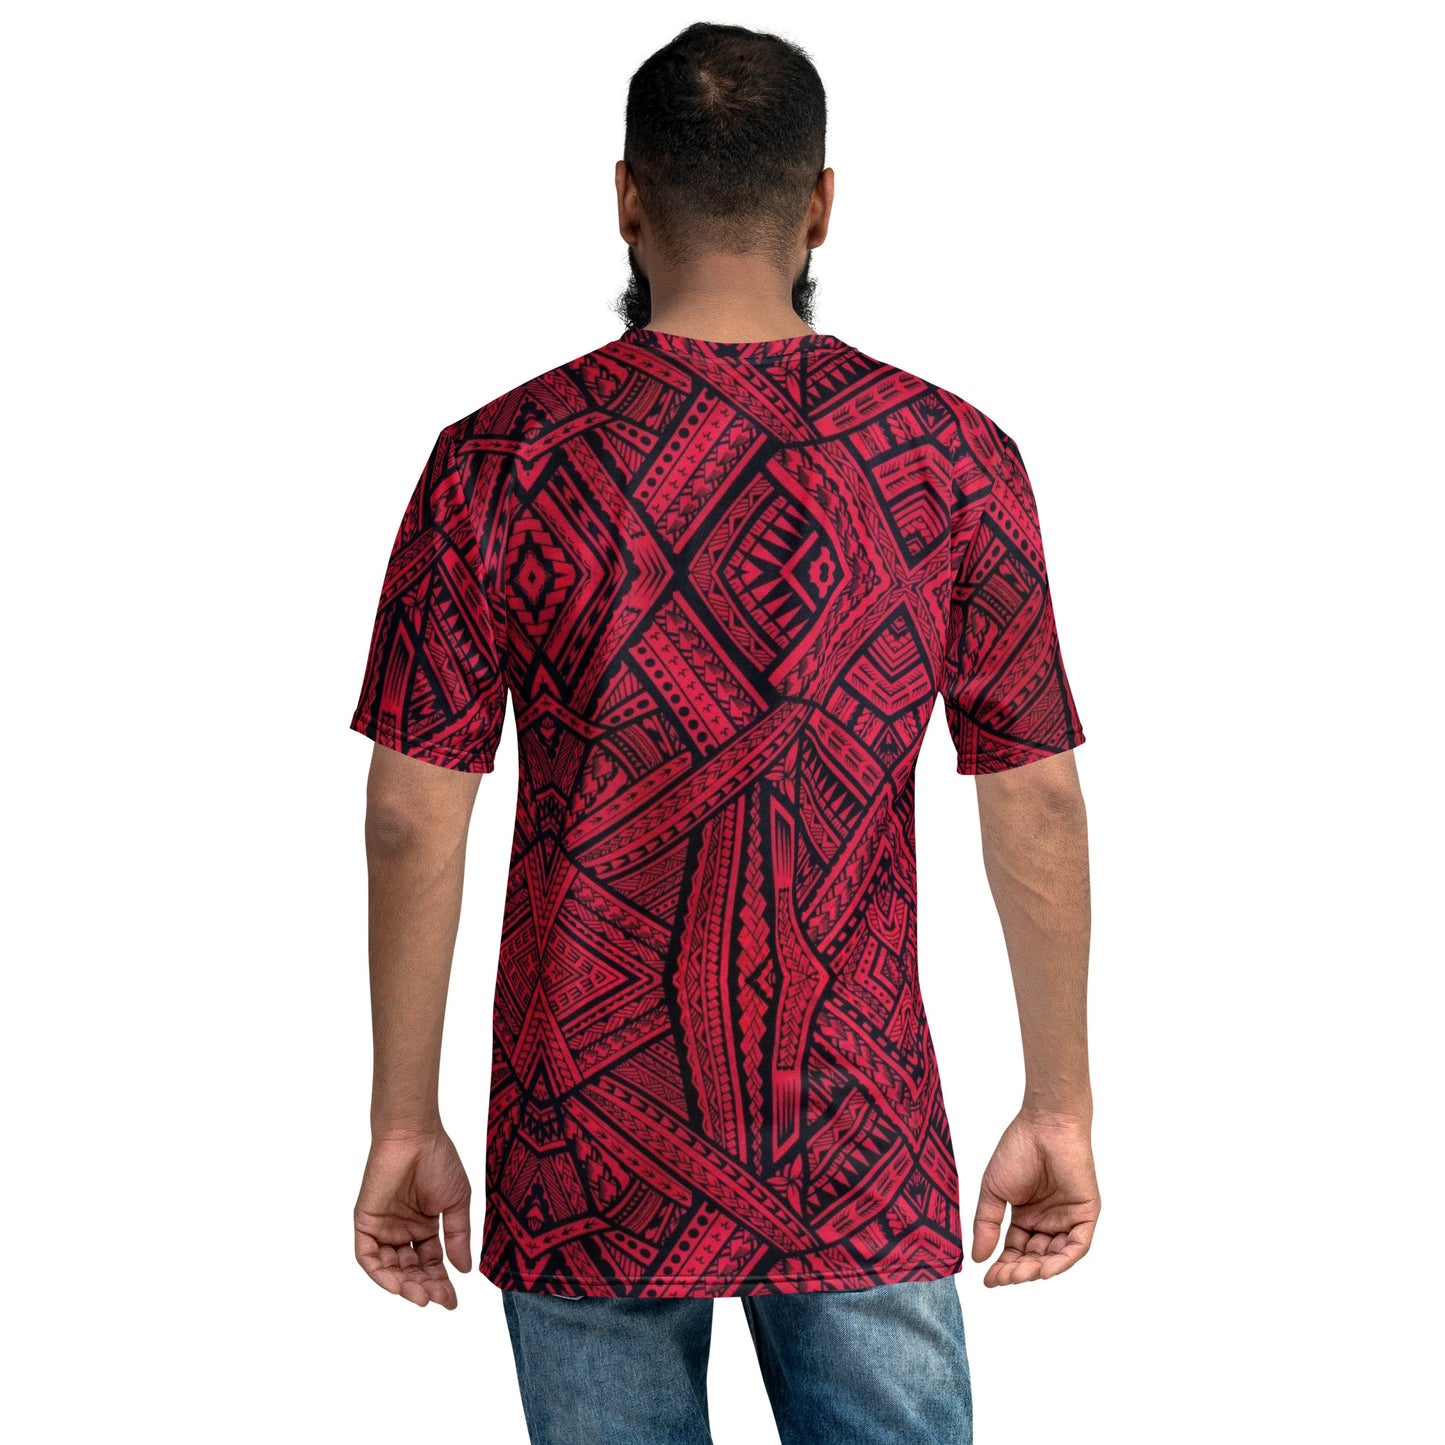 Manulele Tausala (Nu’uuli) Shirt